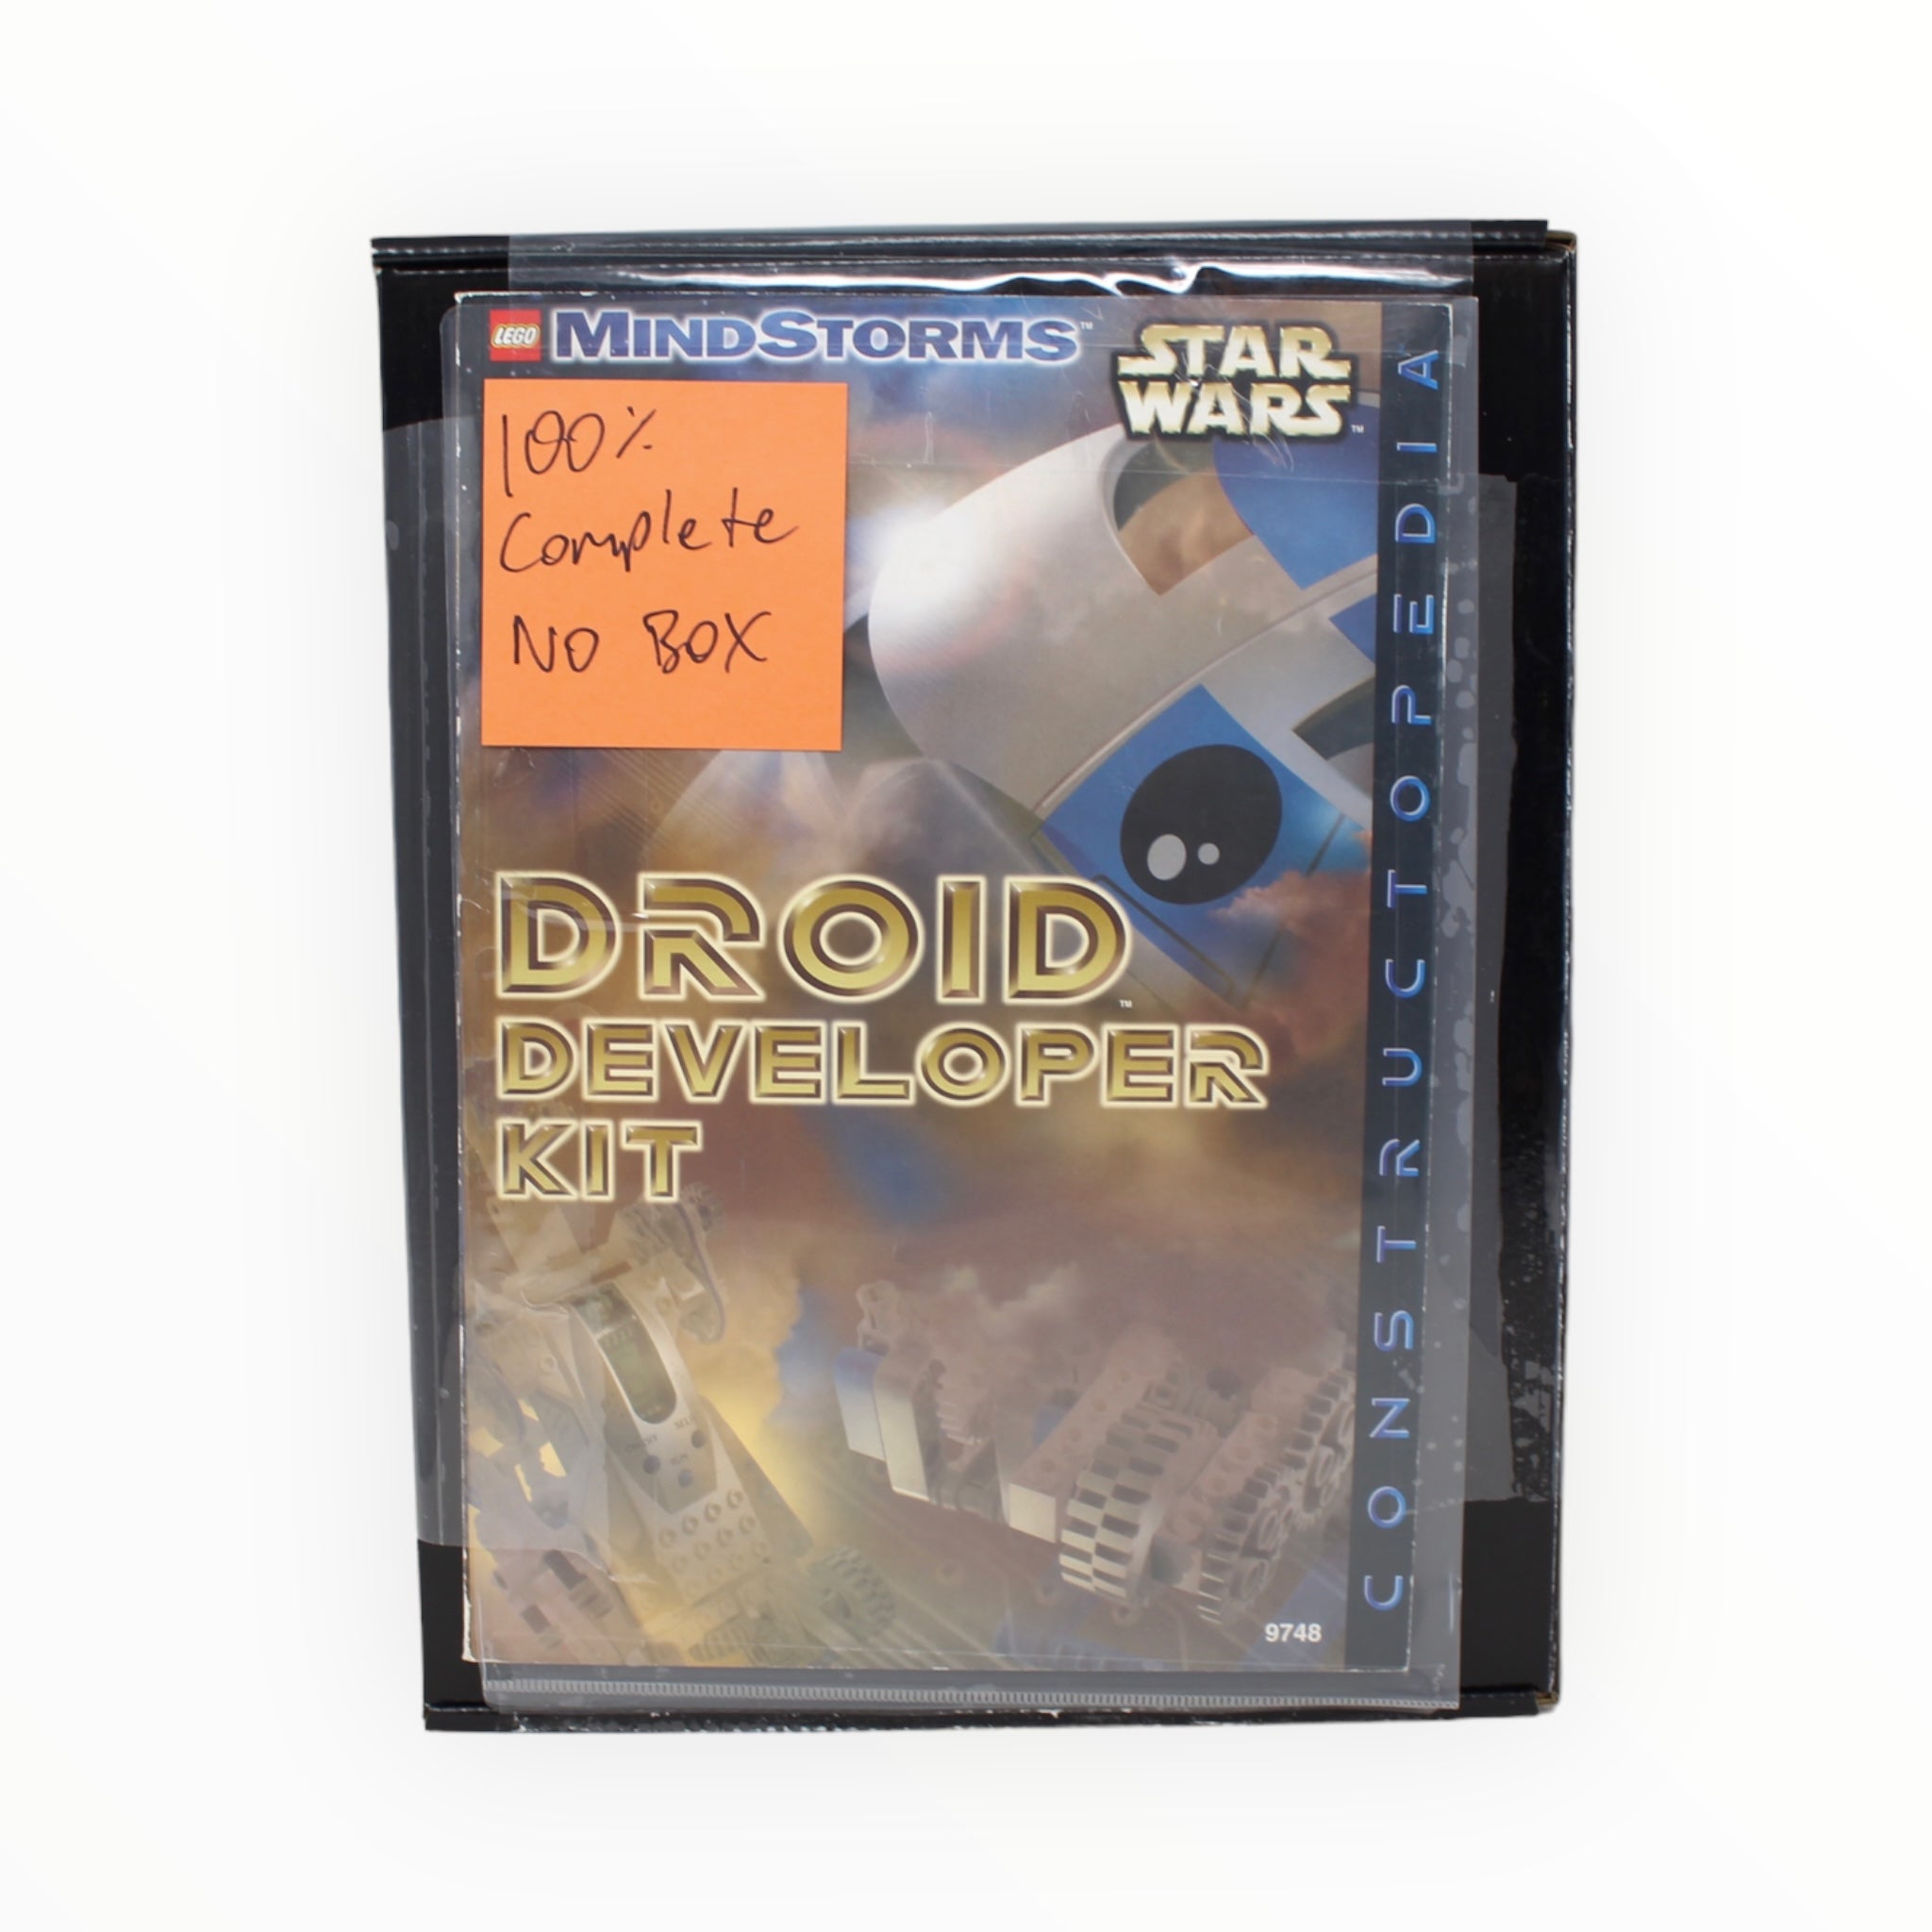 Certified Used Set 9748 Star Wars Droid Developer Kit (no box)